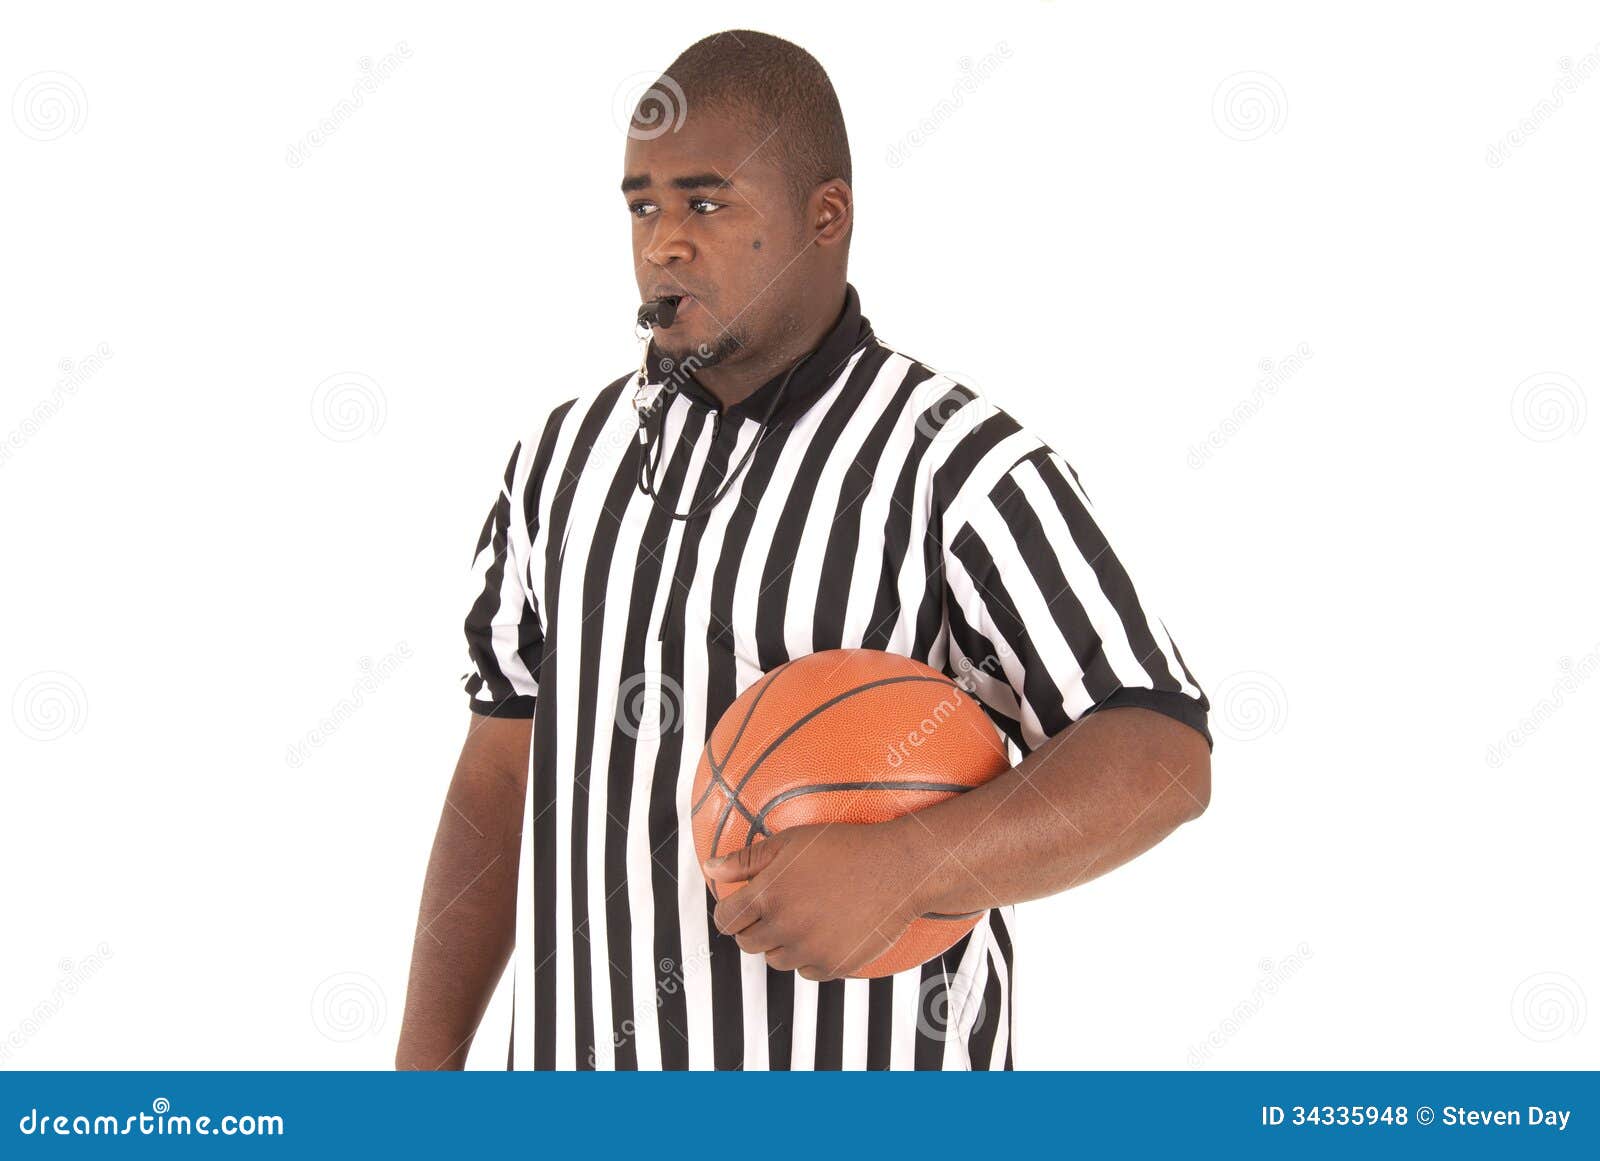 Basketball Referee Uniform 12